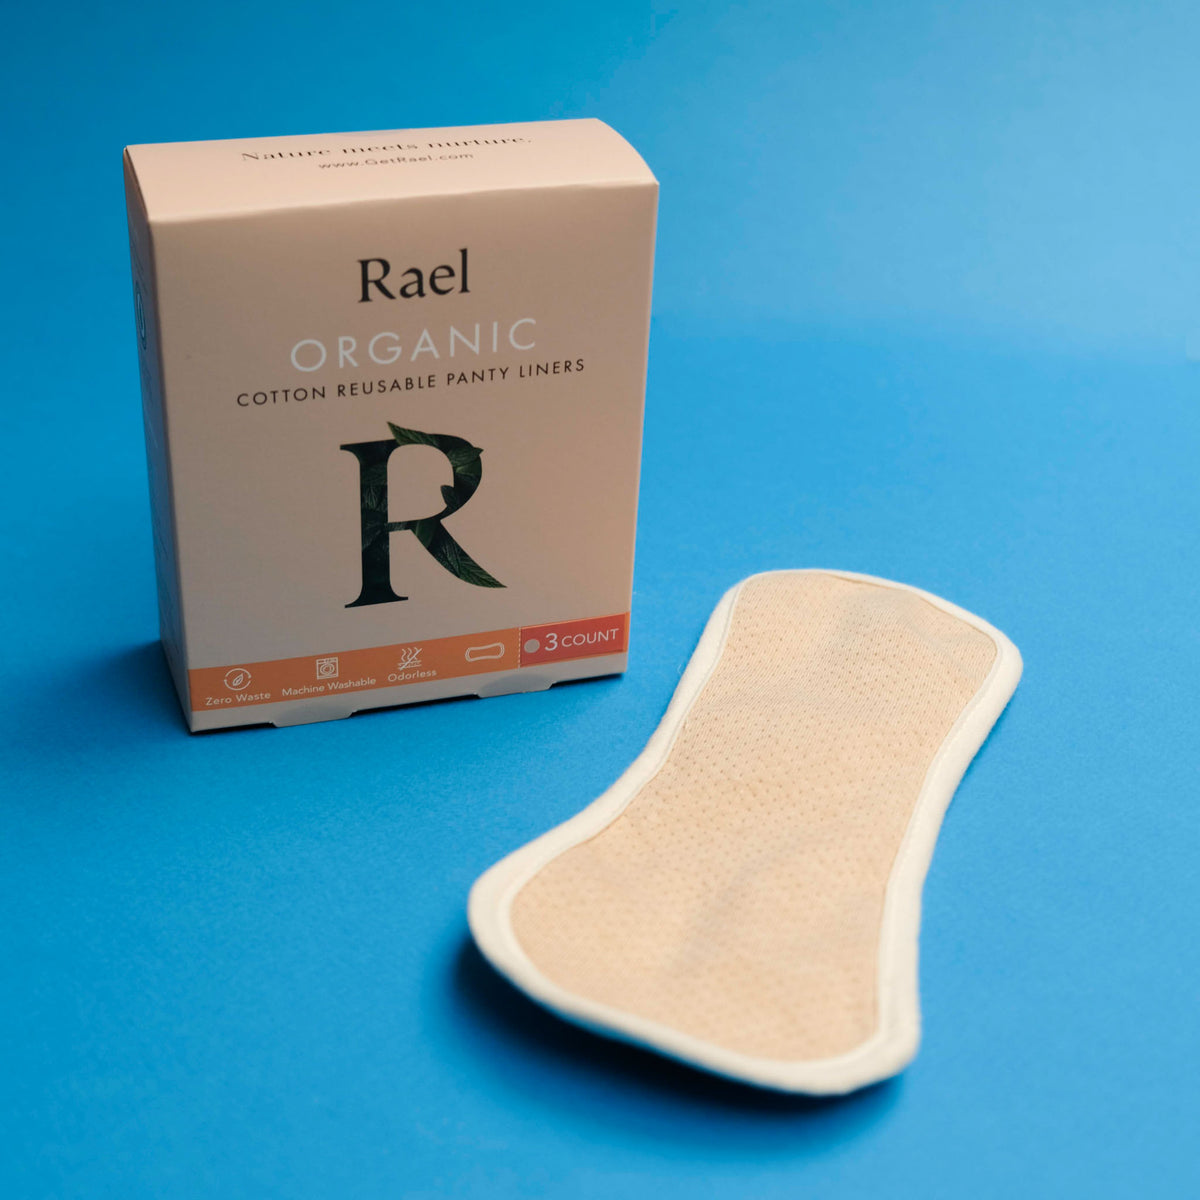 Organic Cotton Reusable Panty Liners, Rael